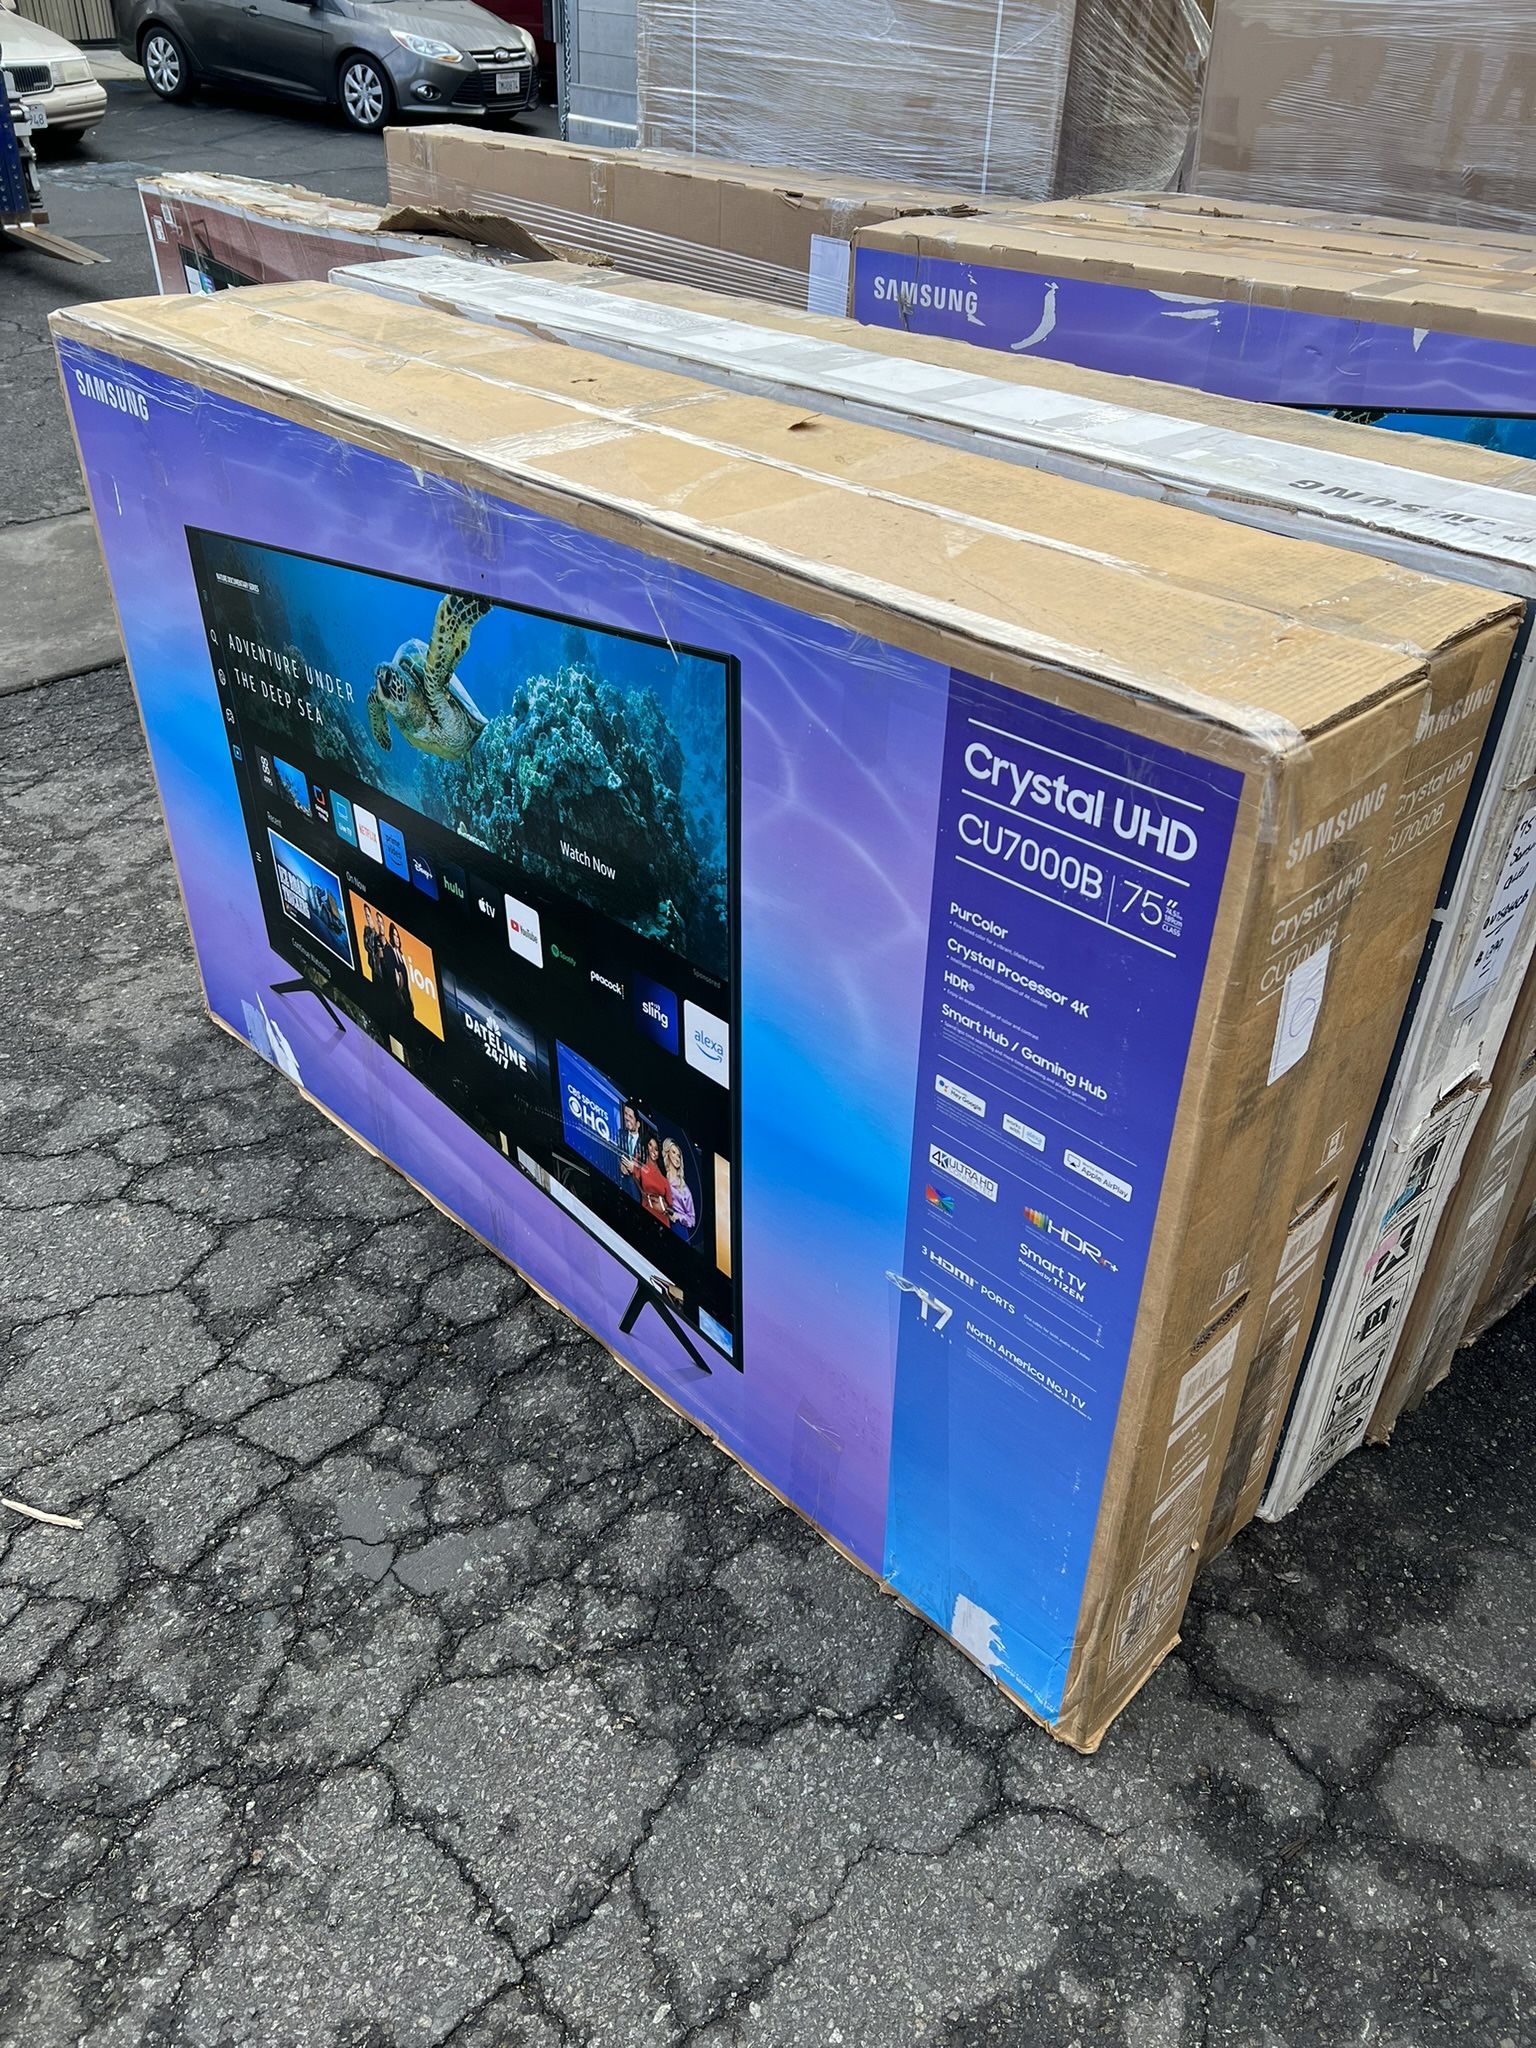 Samsung 75” Crystal CU7000 4K UHD Smart TV